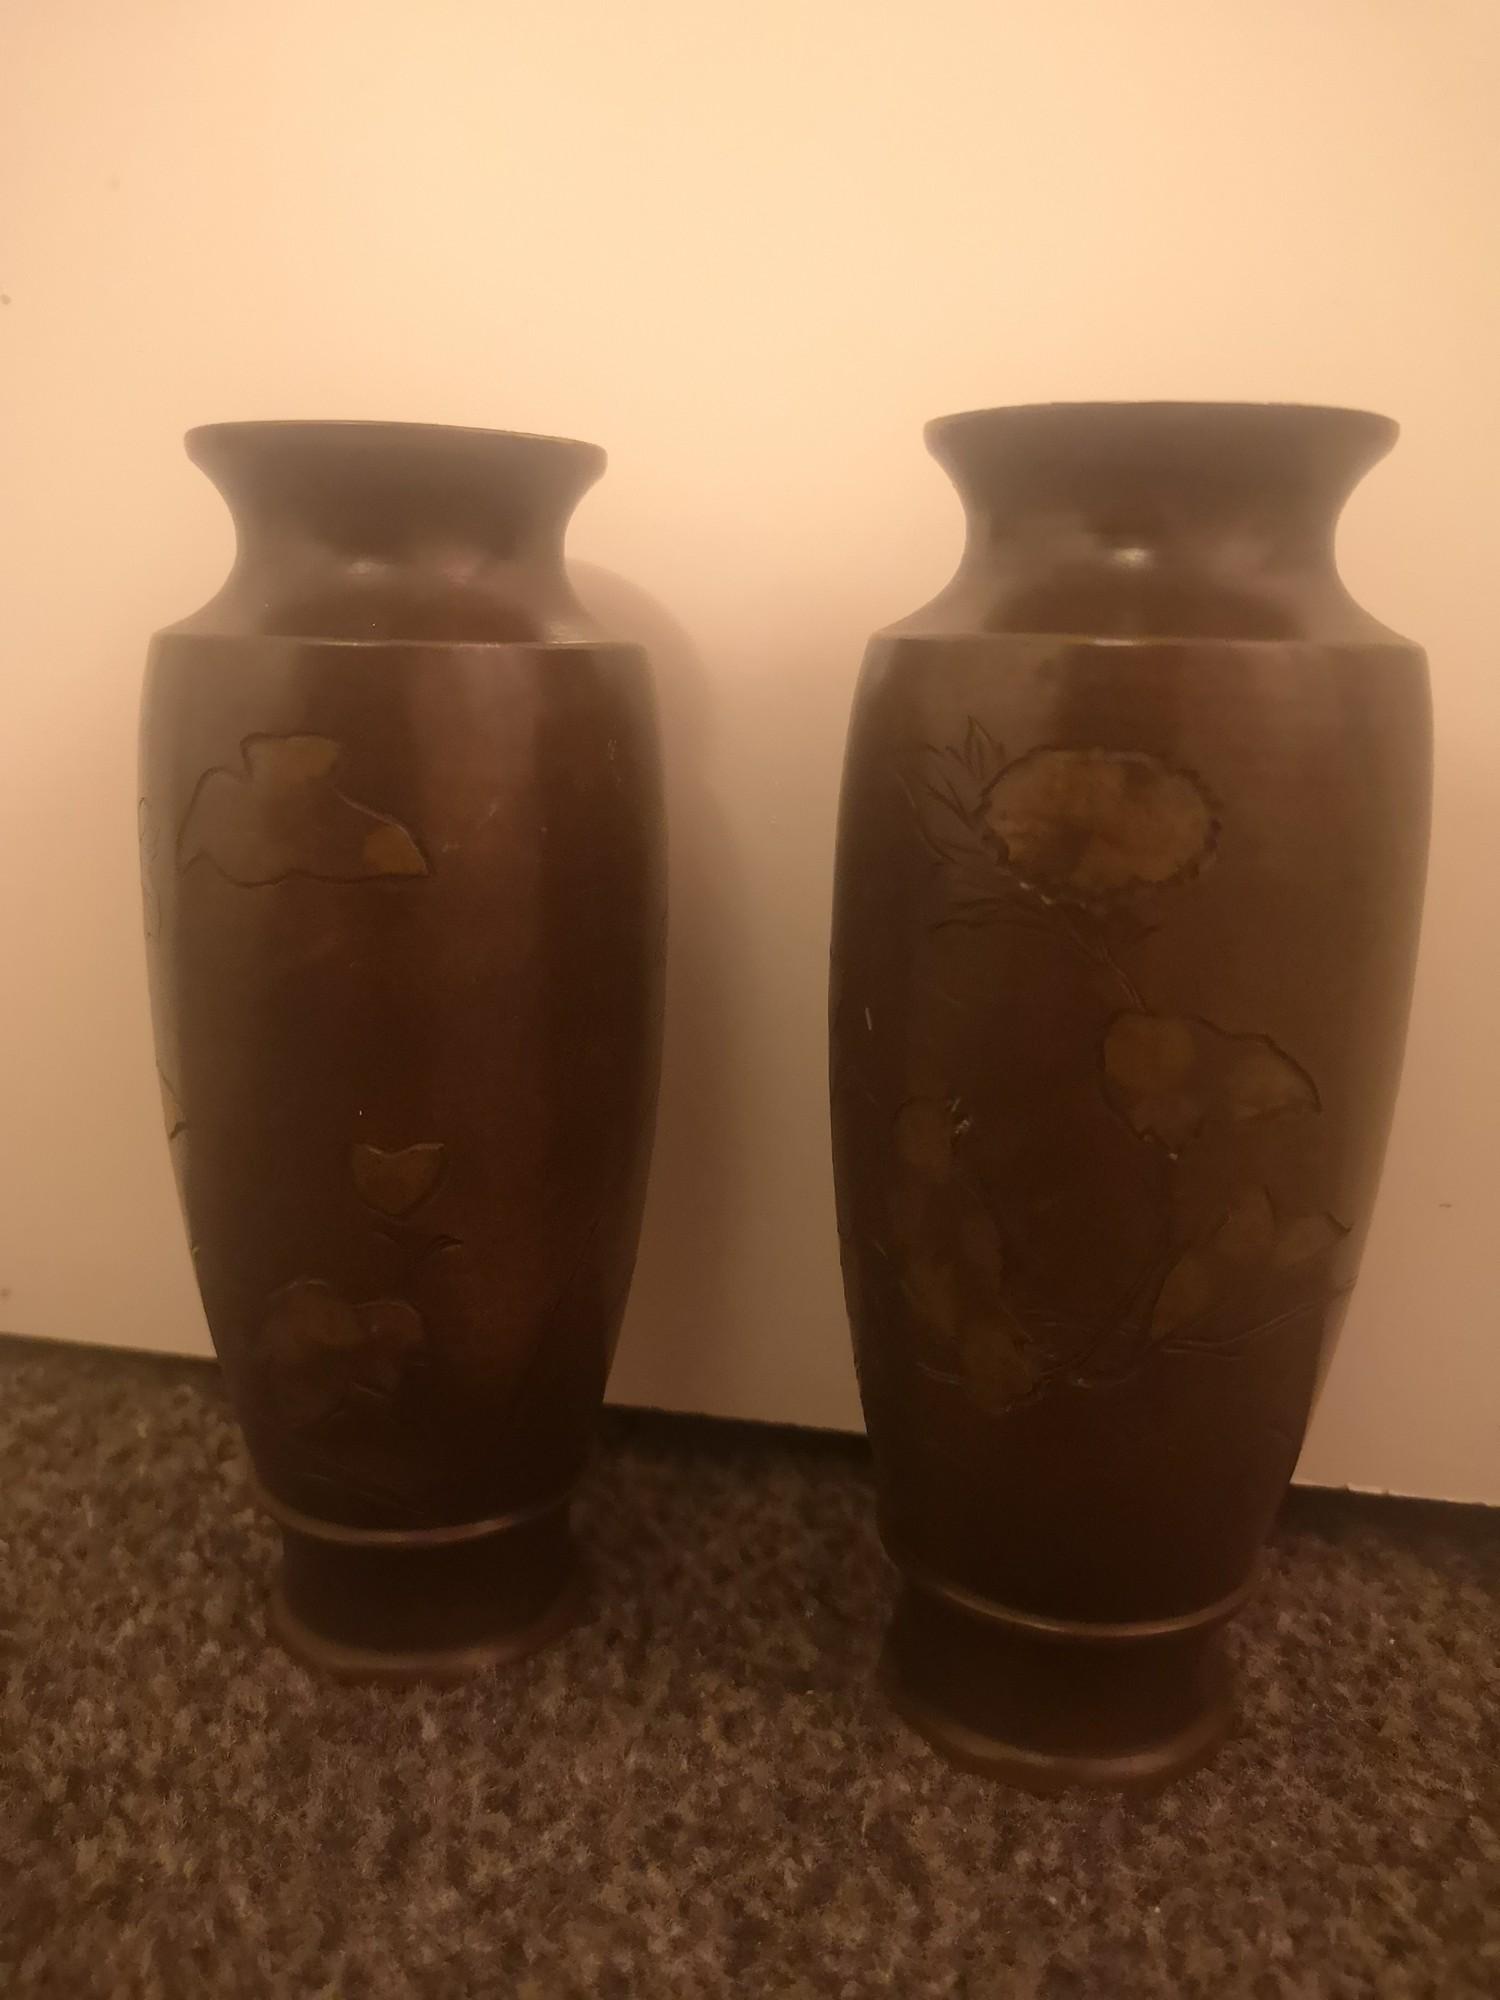 Pair of japenese bronze vases depicting flower design..